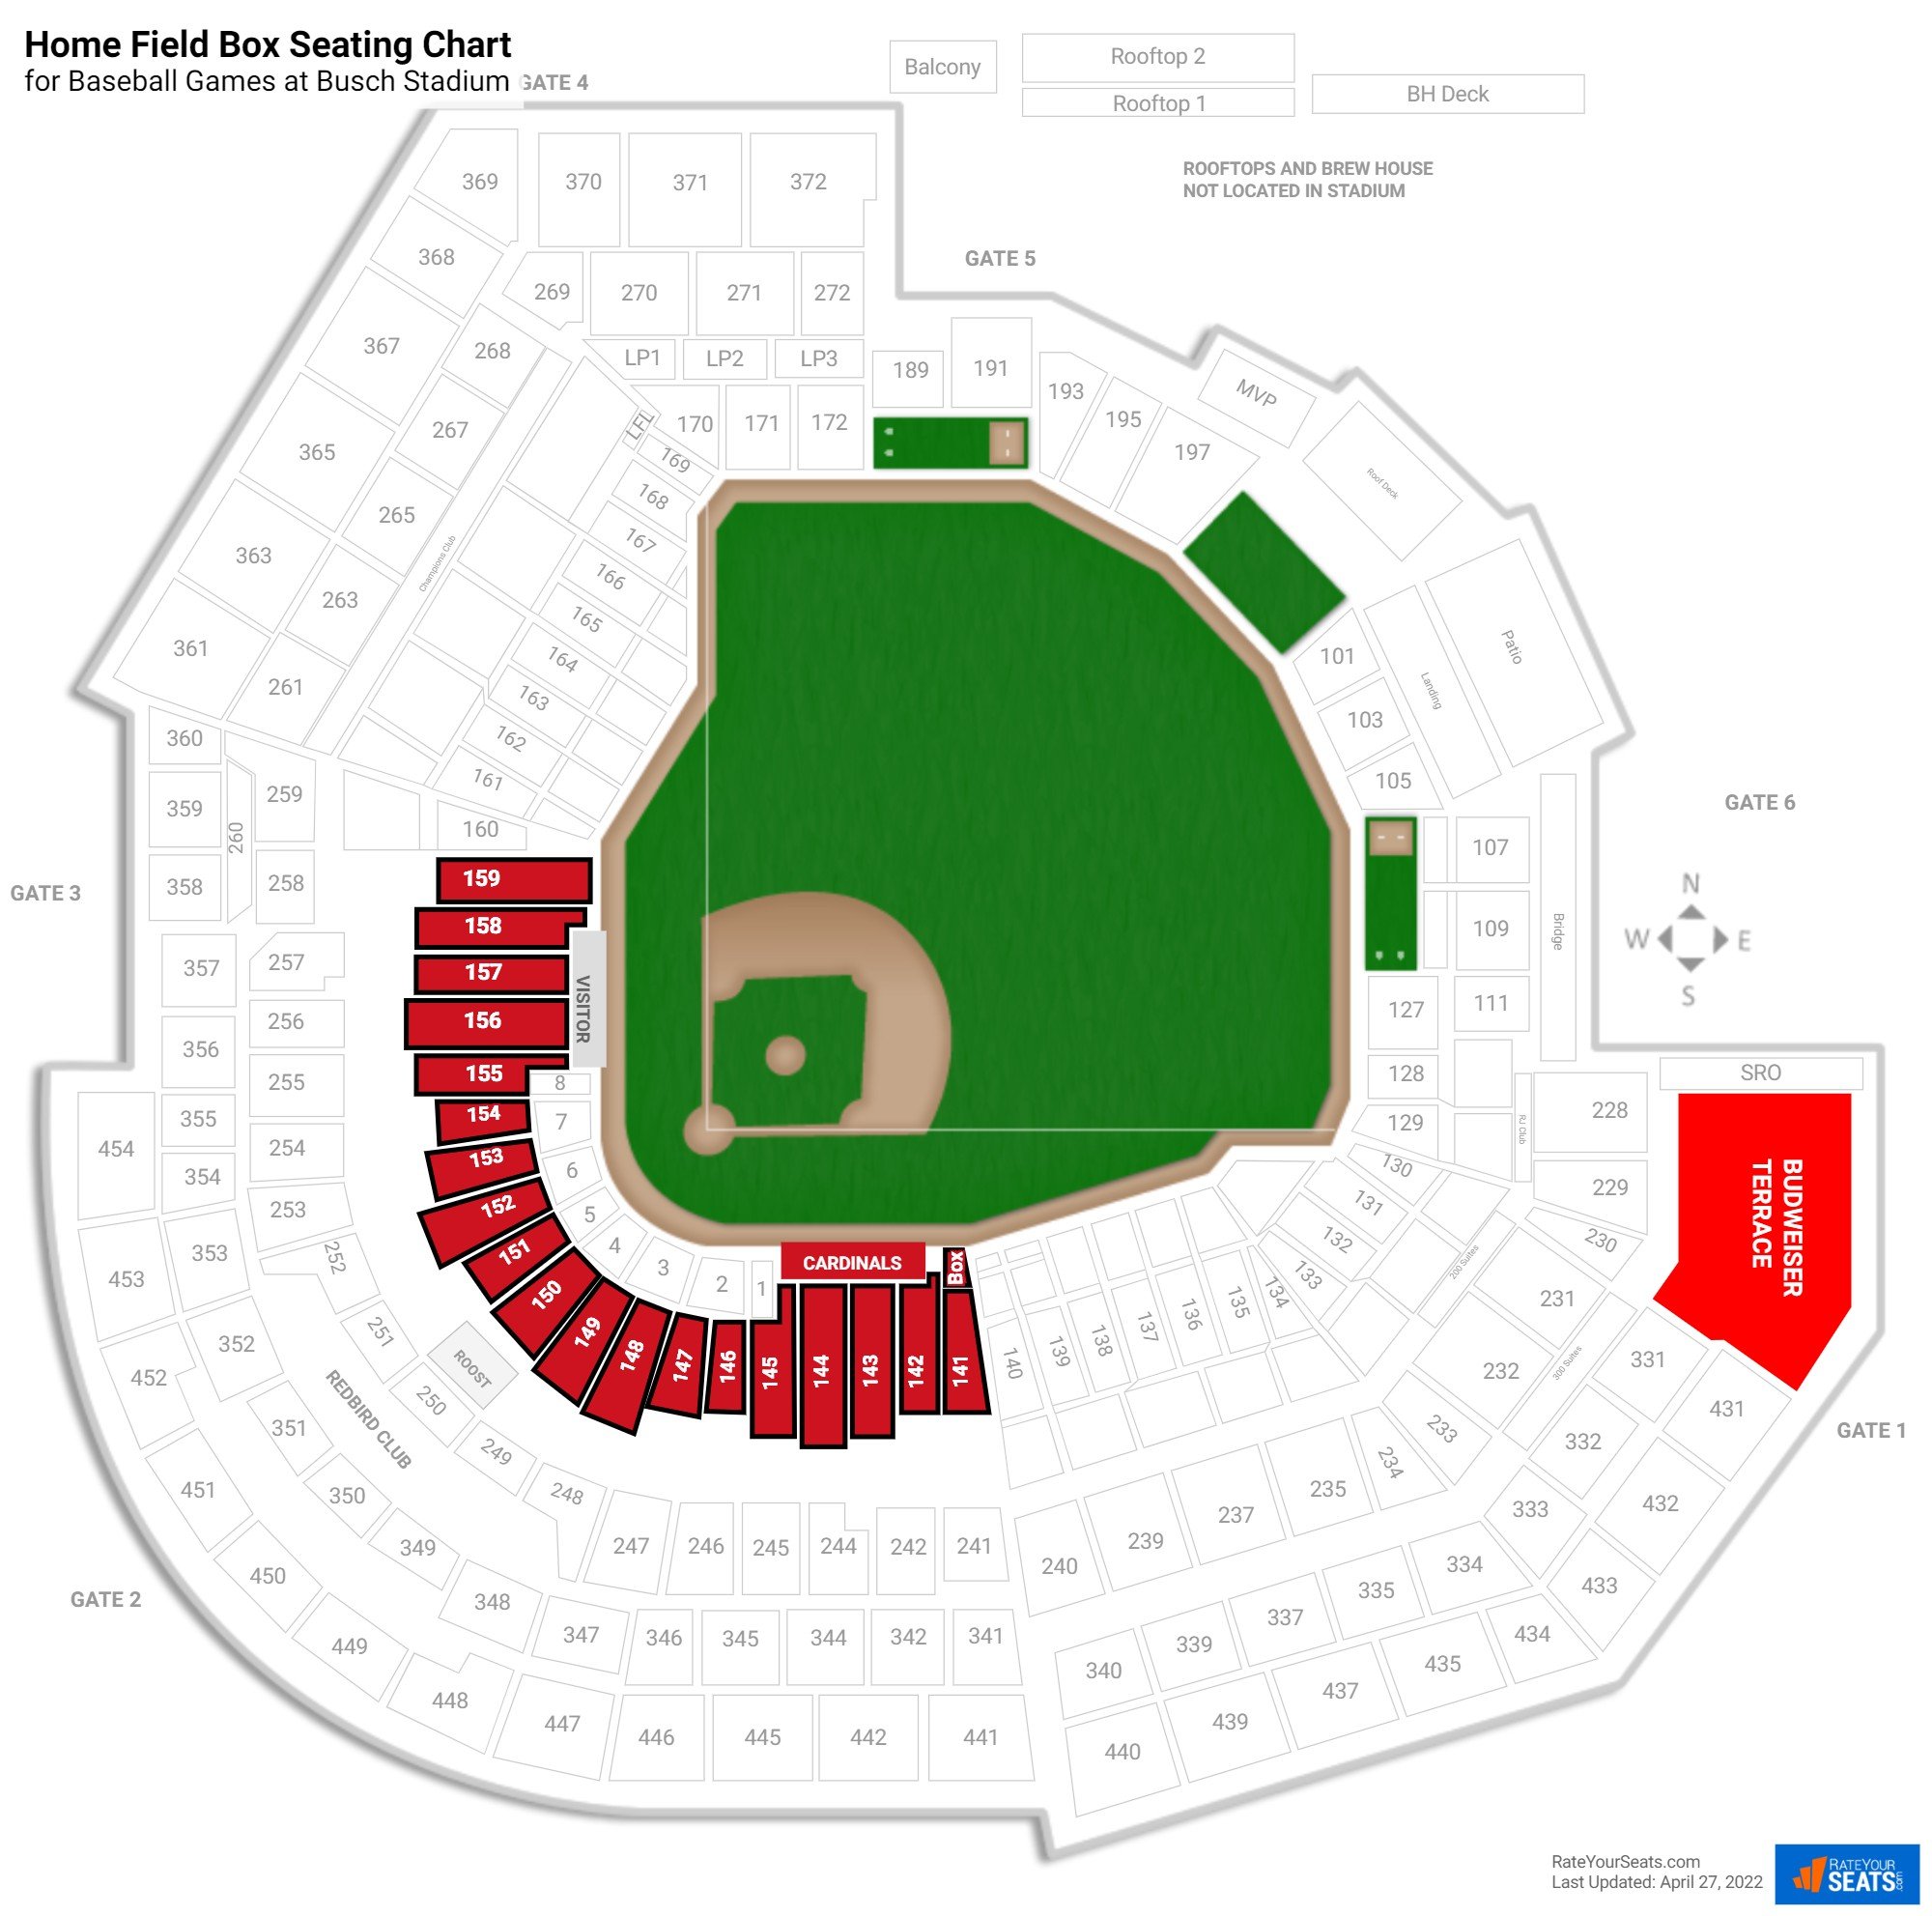 Baseball Home Field Box Seating Chart at Busch Stadium